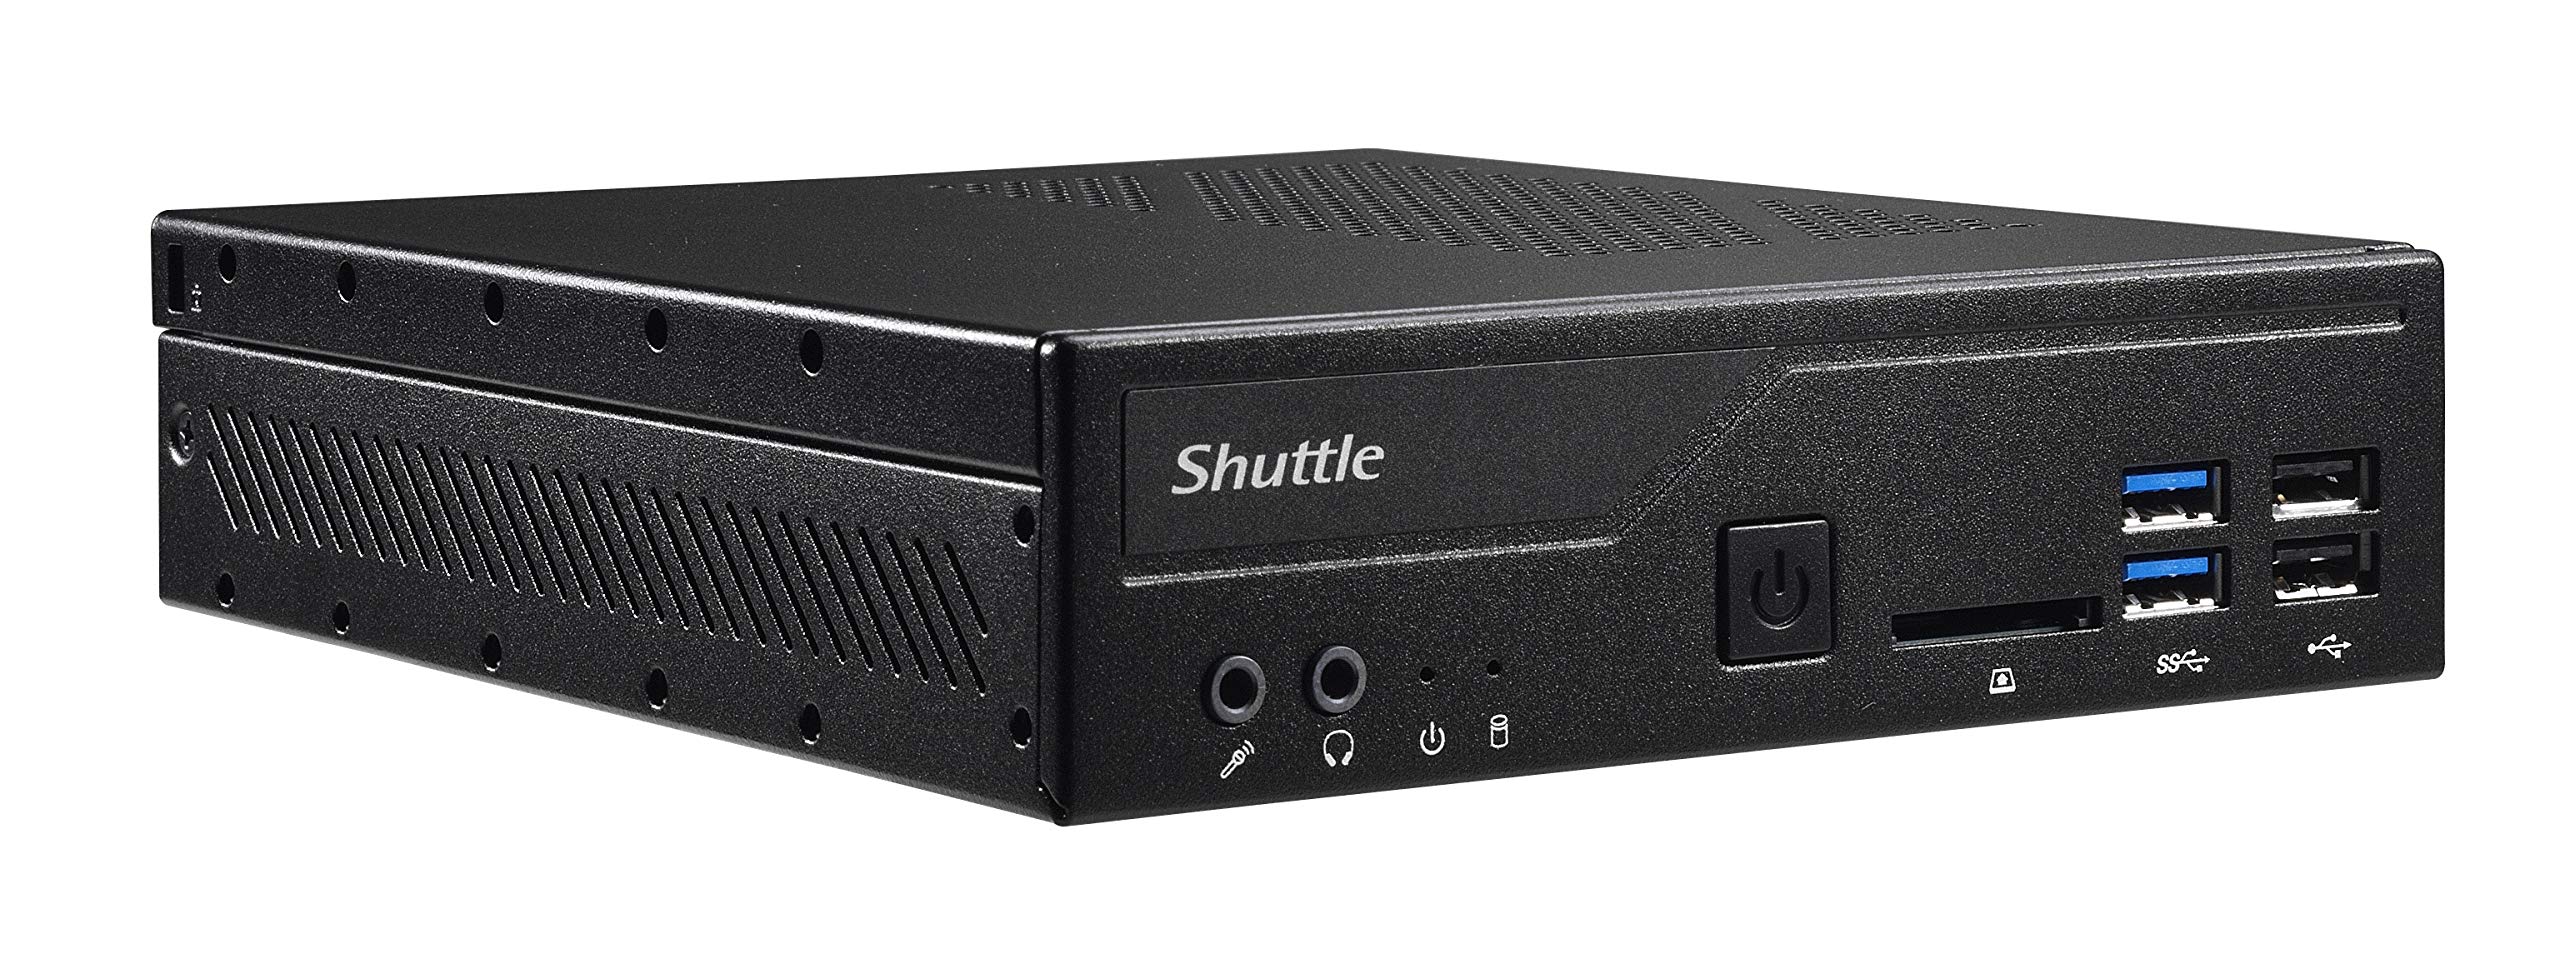 Shuttle XPC Slim DH410 Mini Barebone PC Intel H410 Support 65W Cometlake CPU No Ram No HDD/SSD No CPU No OS